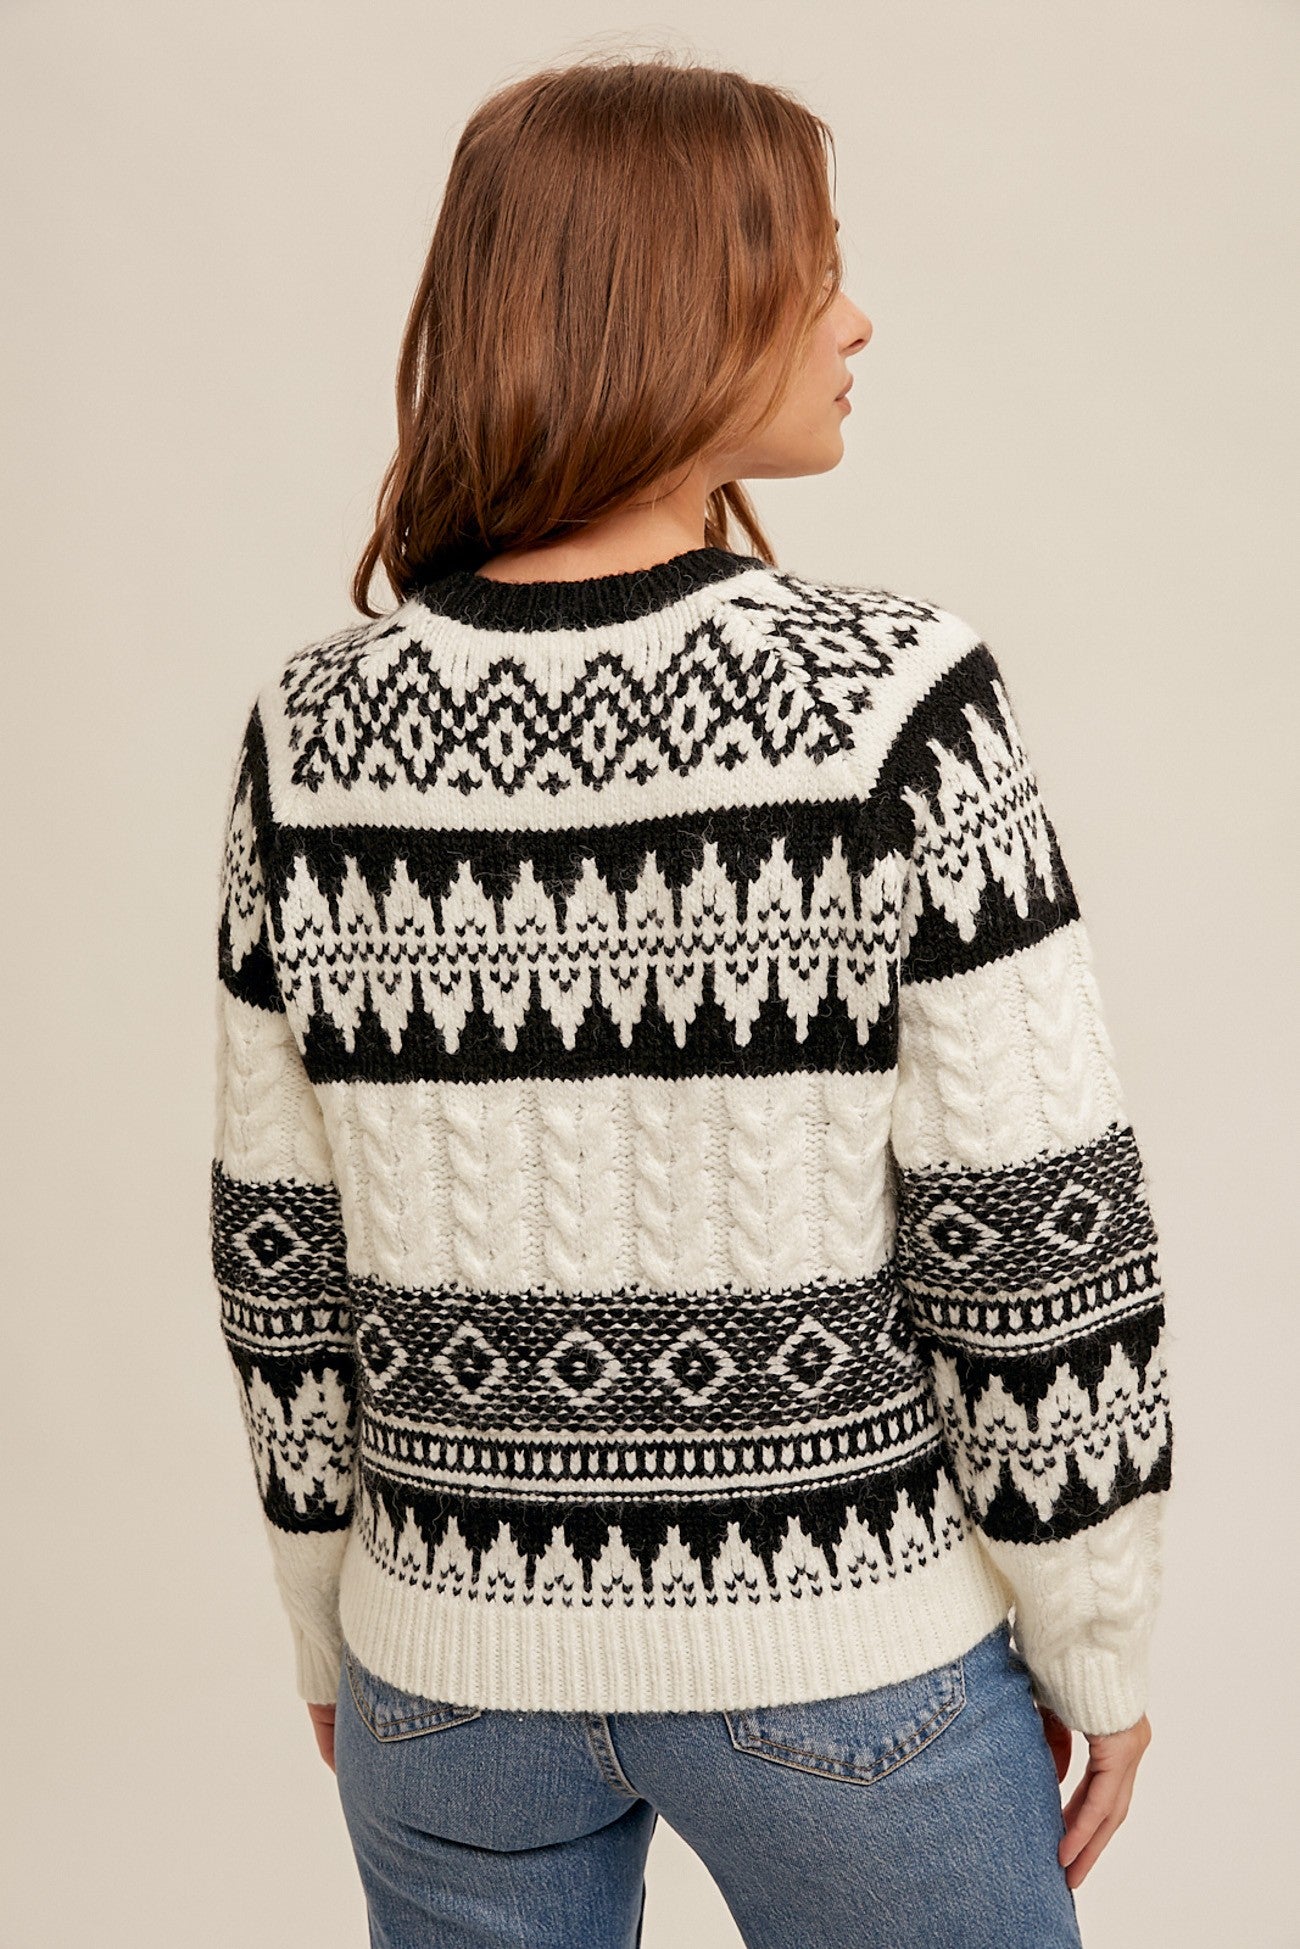 Denali Sweater final sale